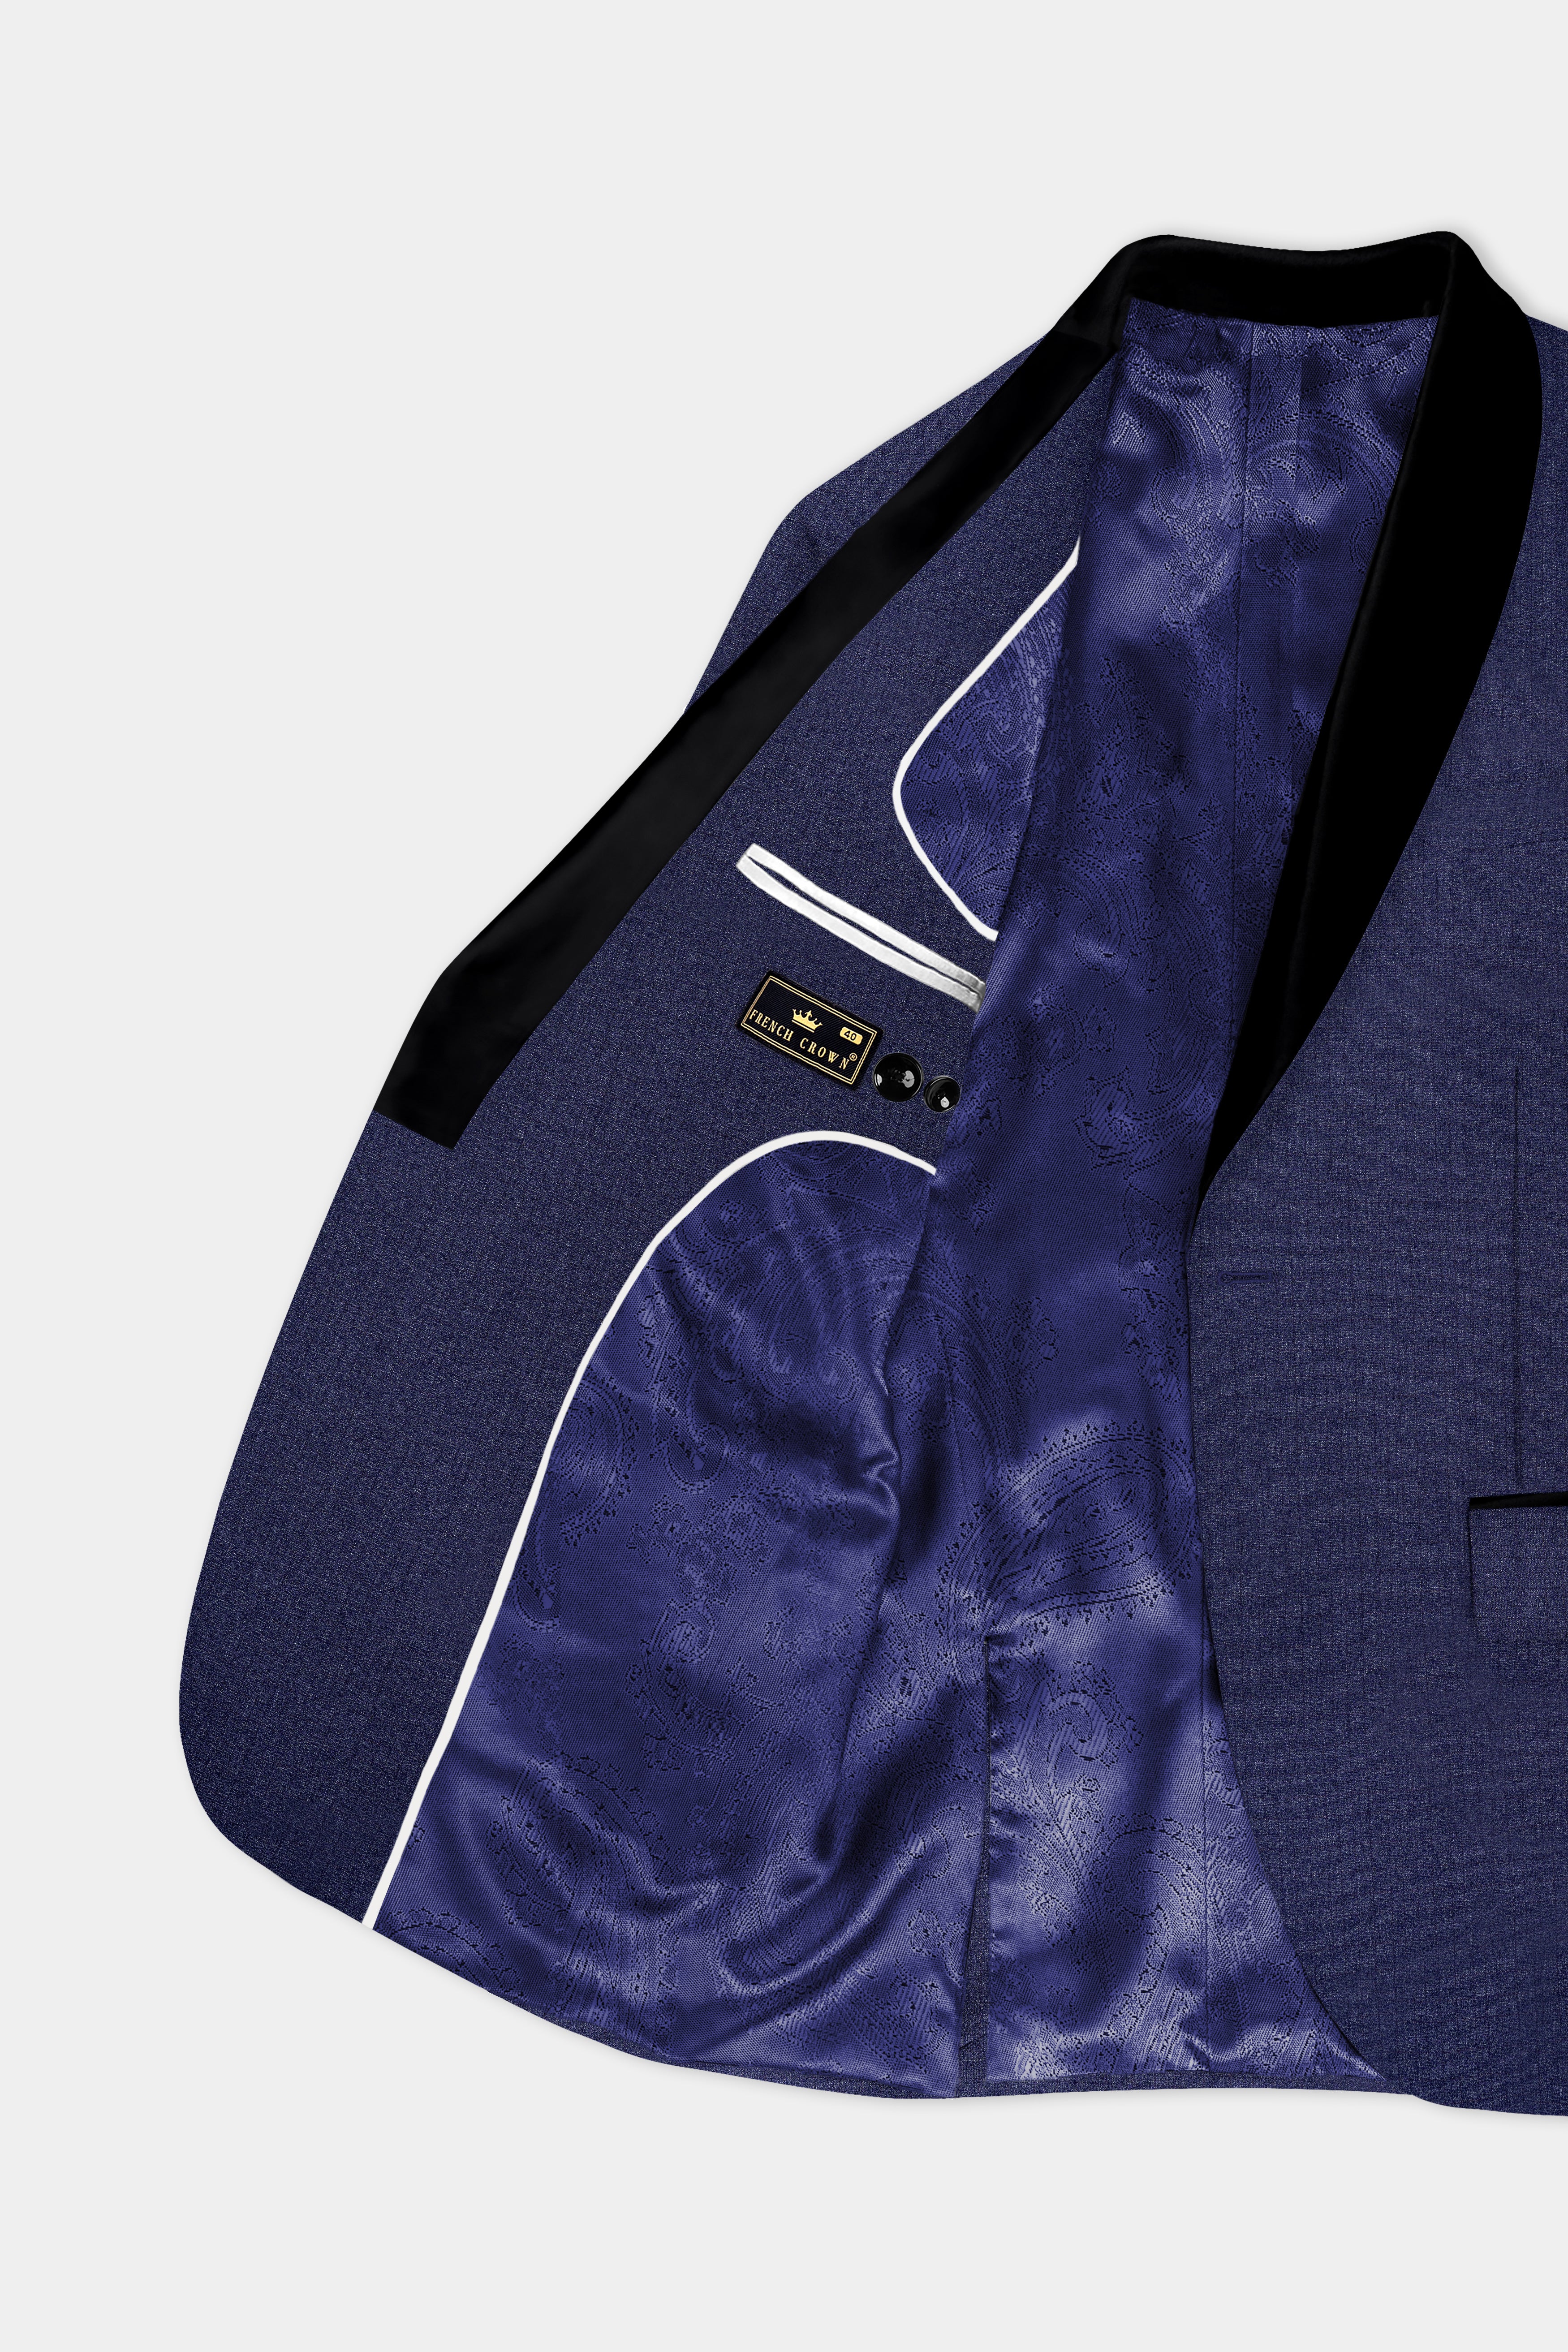 Ebony Clay Blue Textured Wool Blend Tuxedo Suit